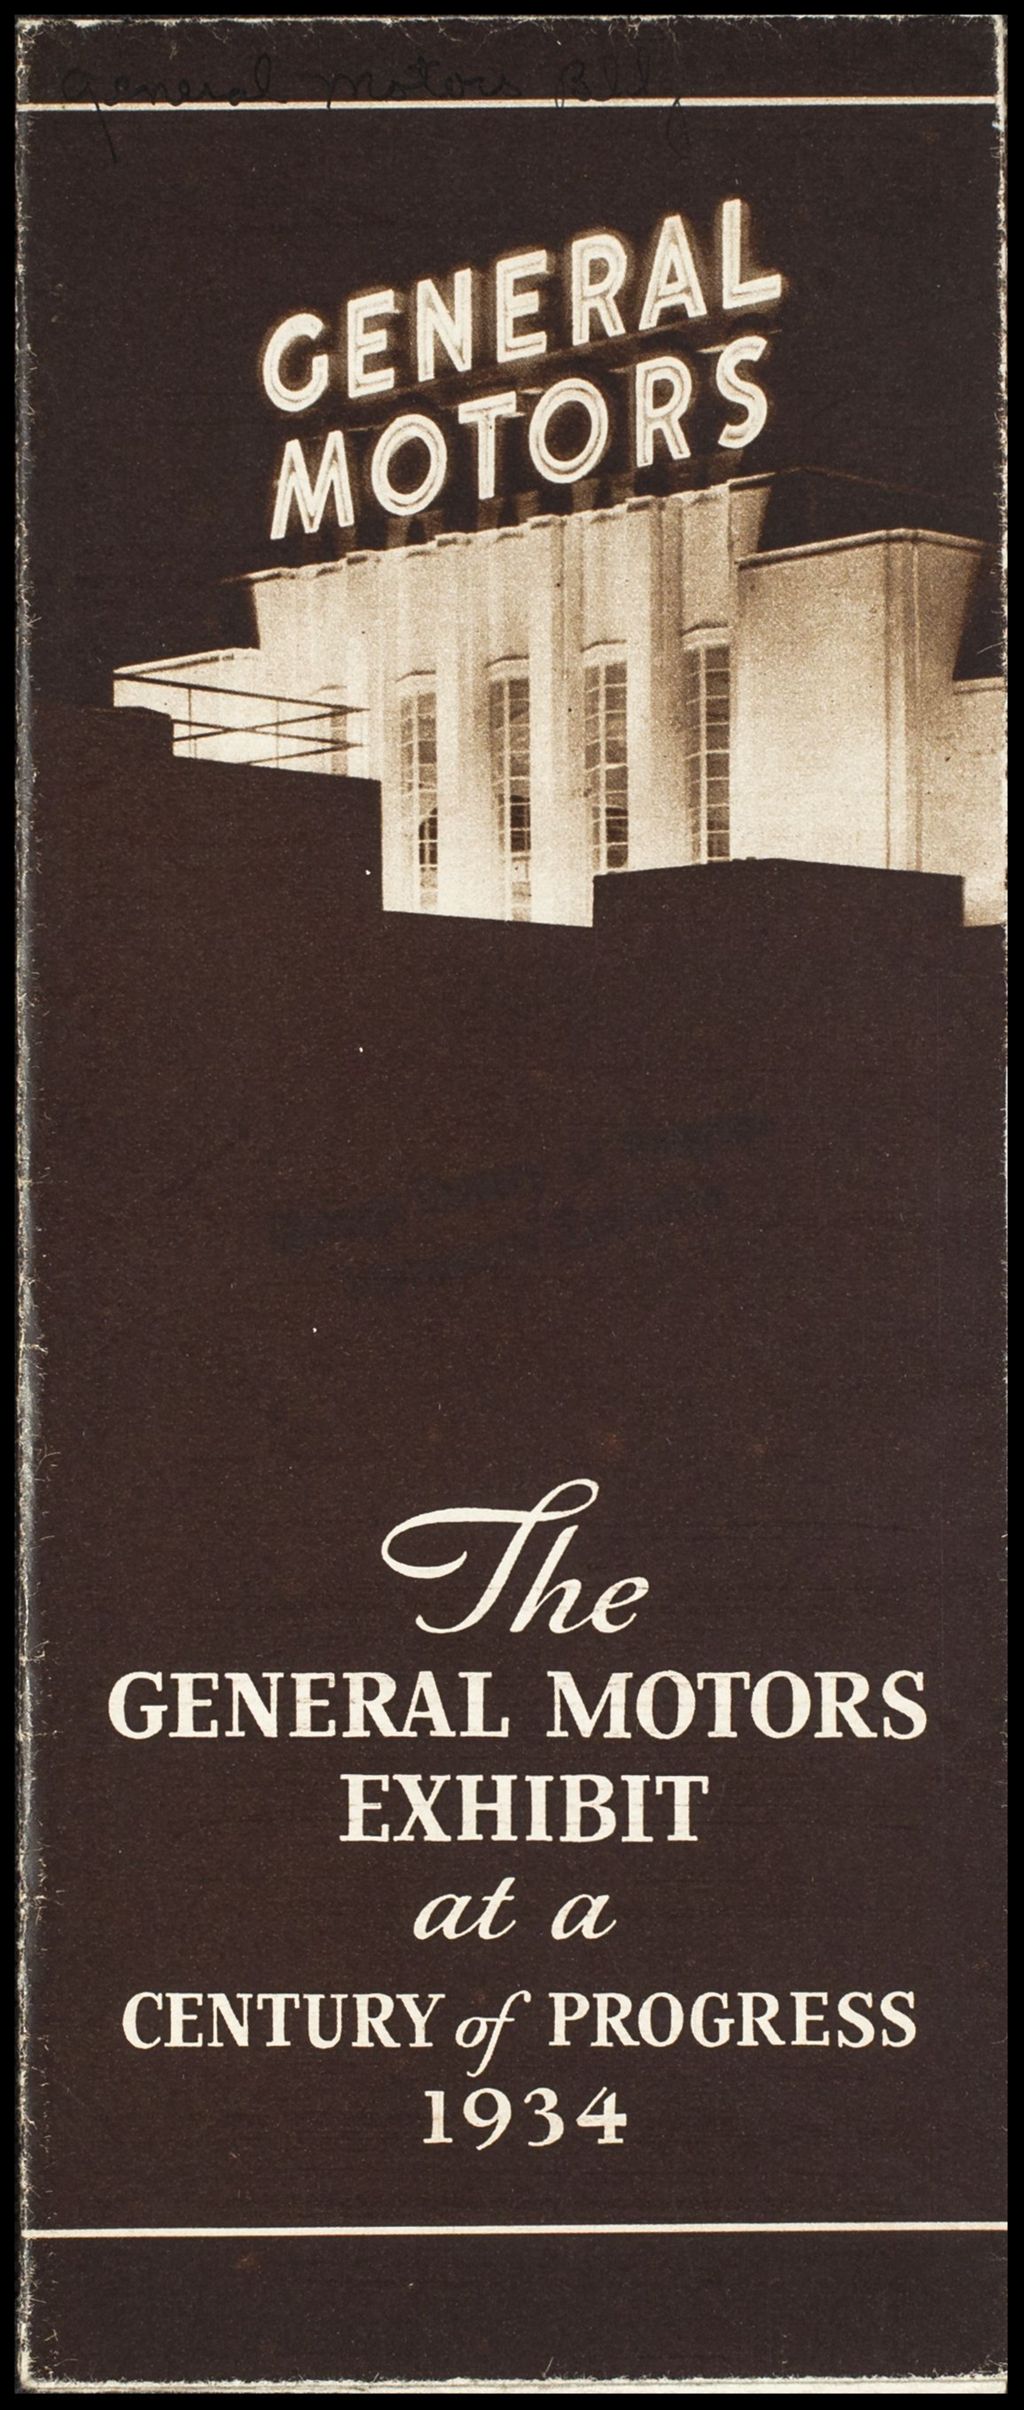 Miniature of General Motors building (Folder 16-305)